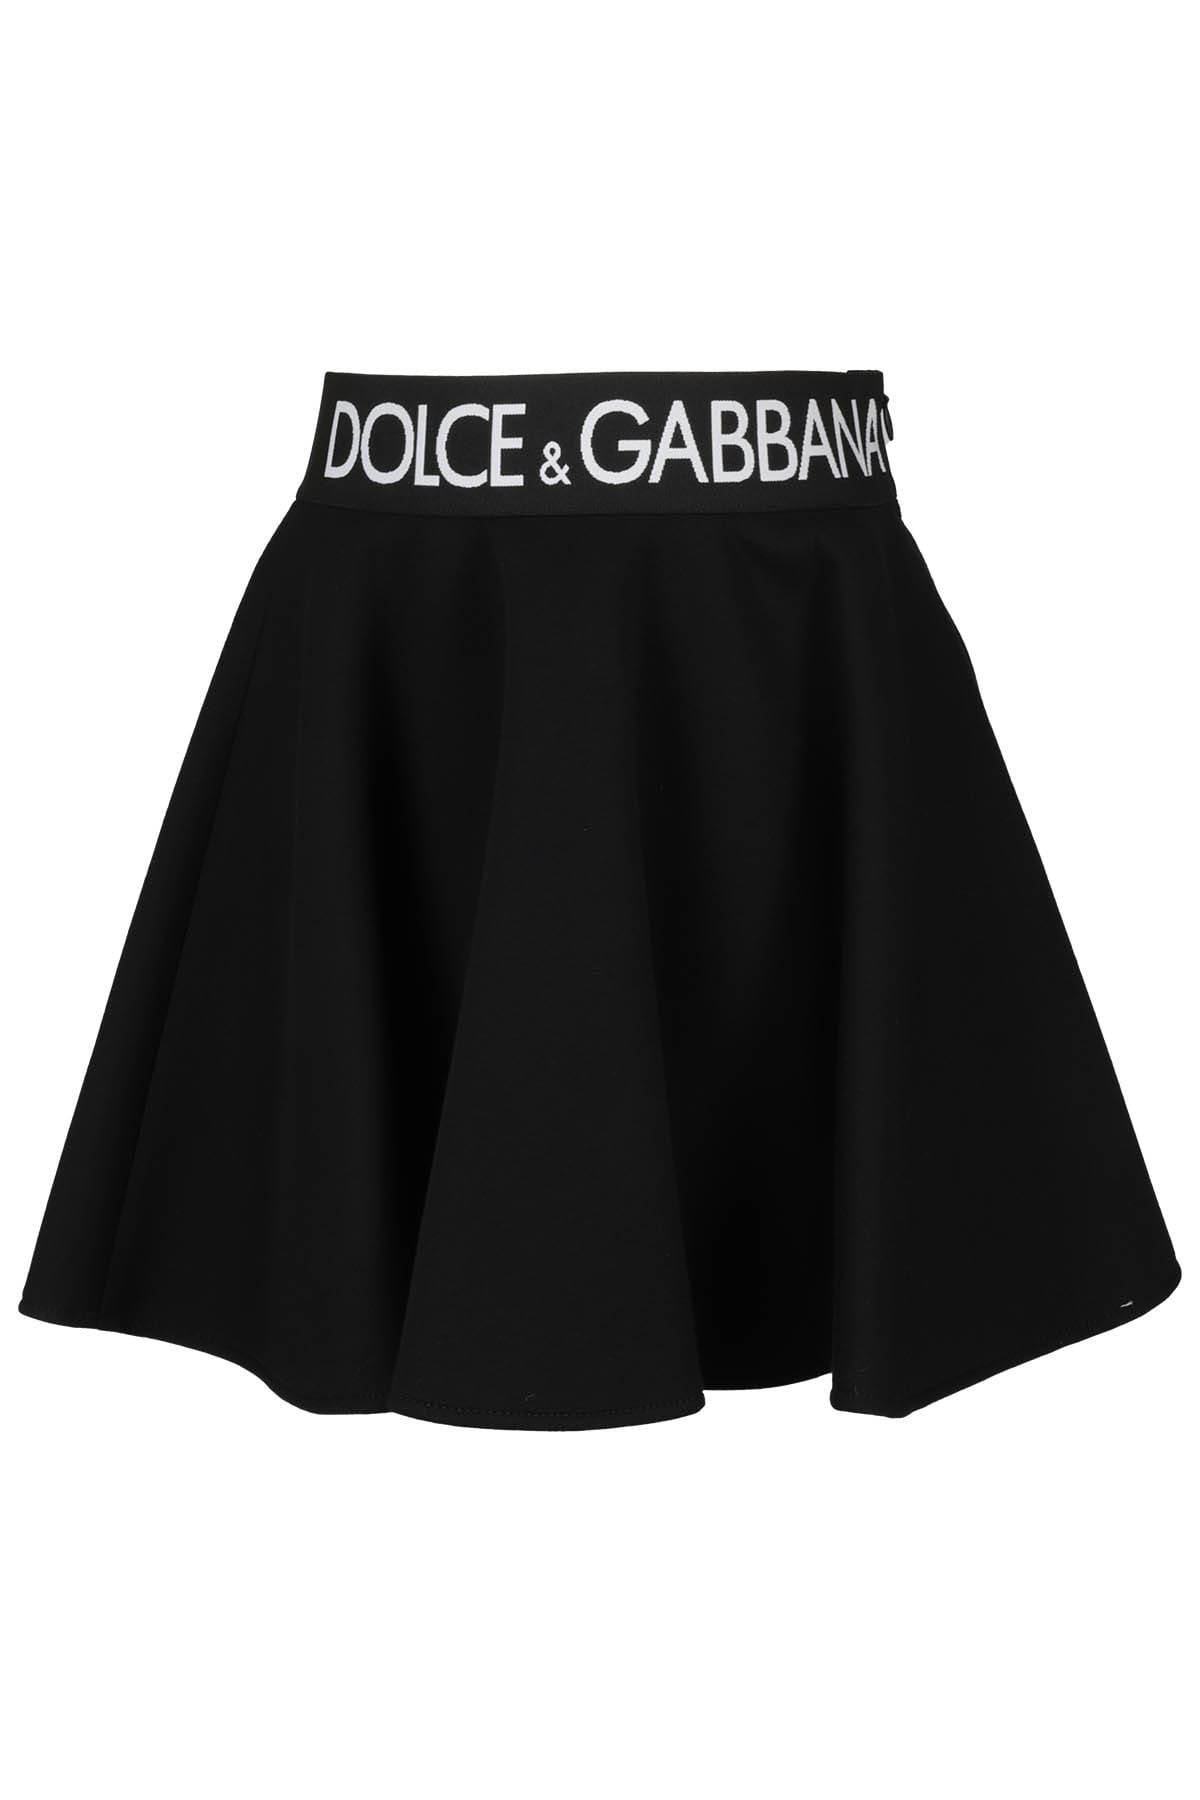 Dolce & Gabbana Kids' Elastic Logo In Nero